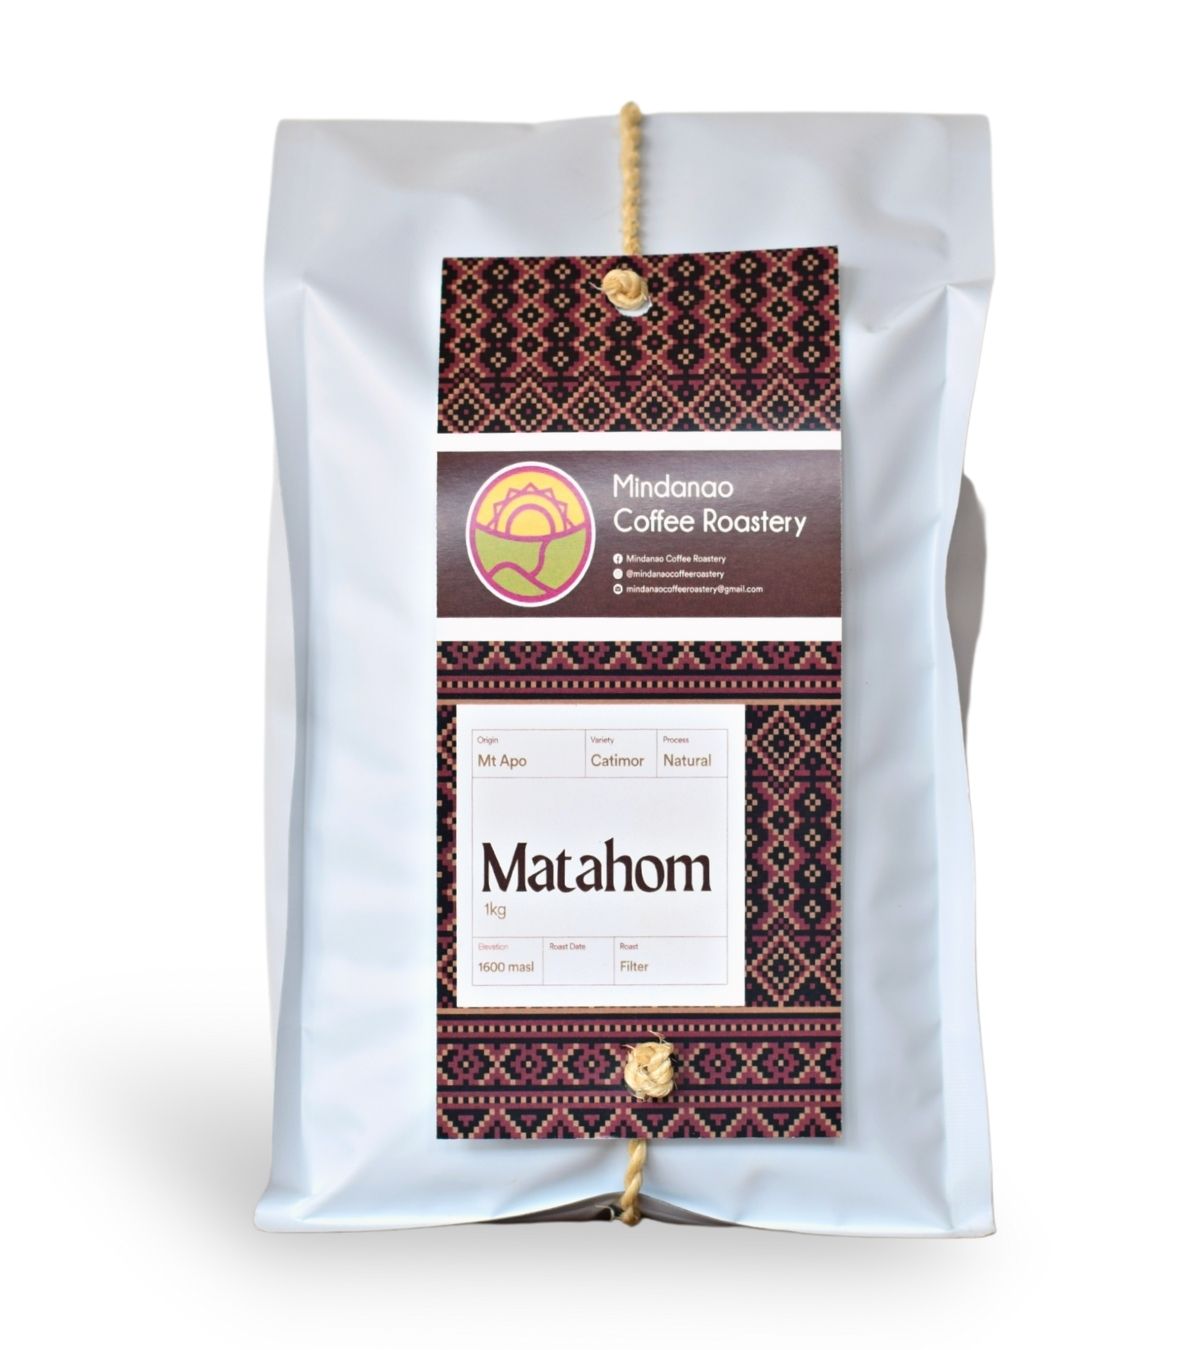 Matahom - Mindanao Coffee Roastery